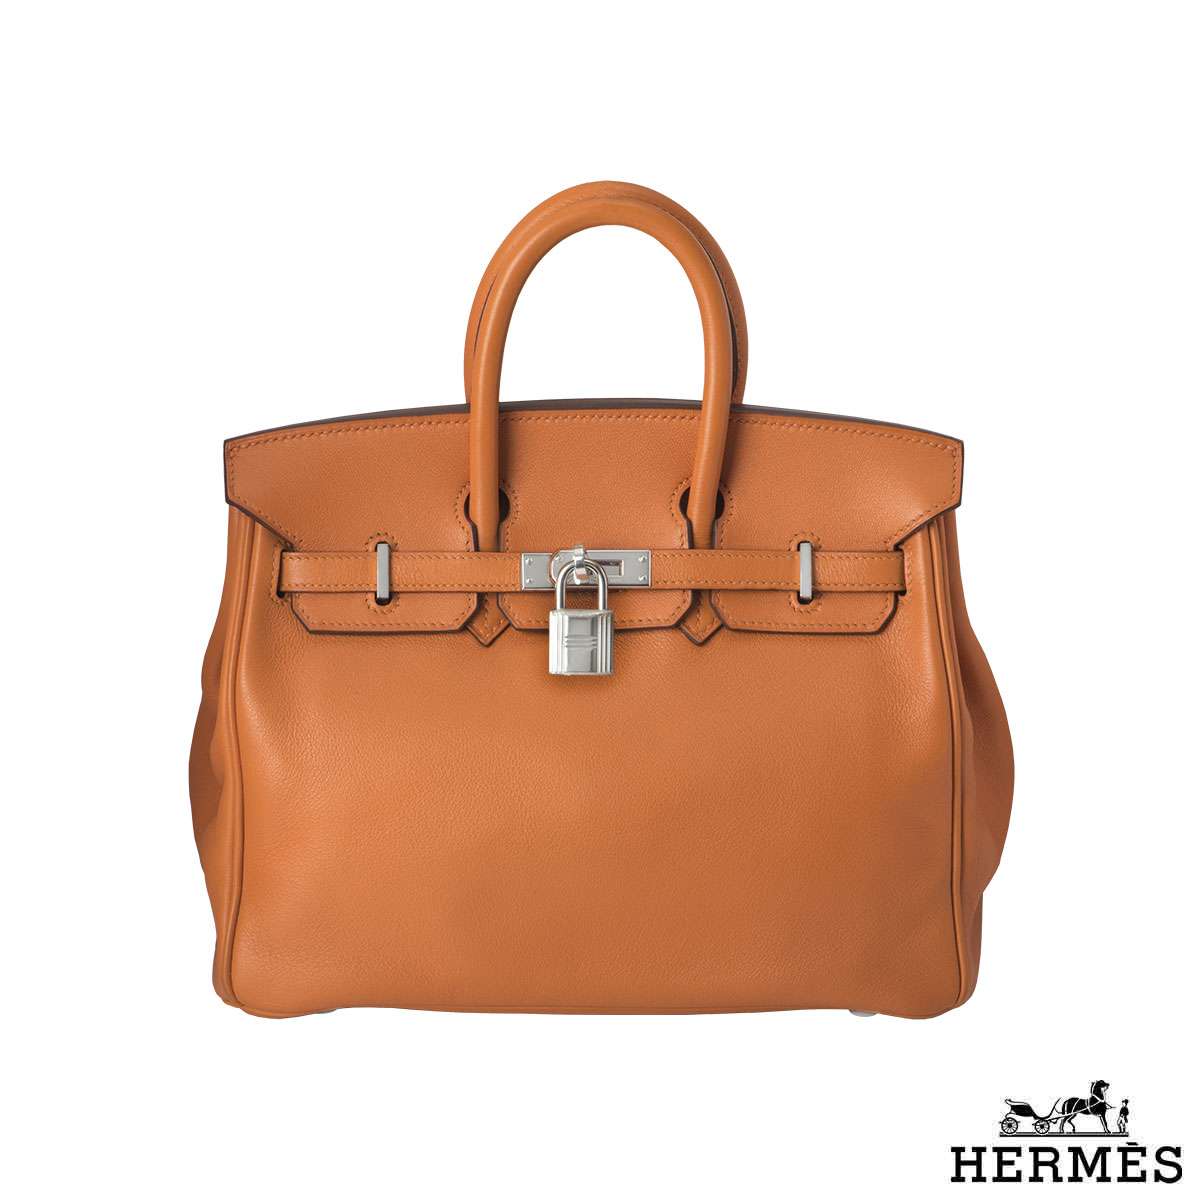 Hermes Birkin Handbag 25cm